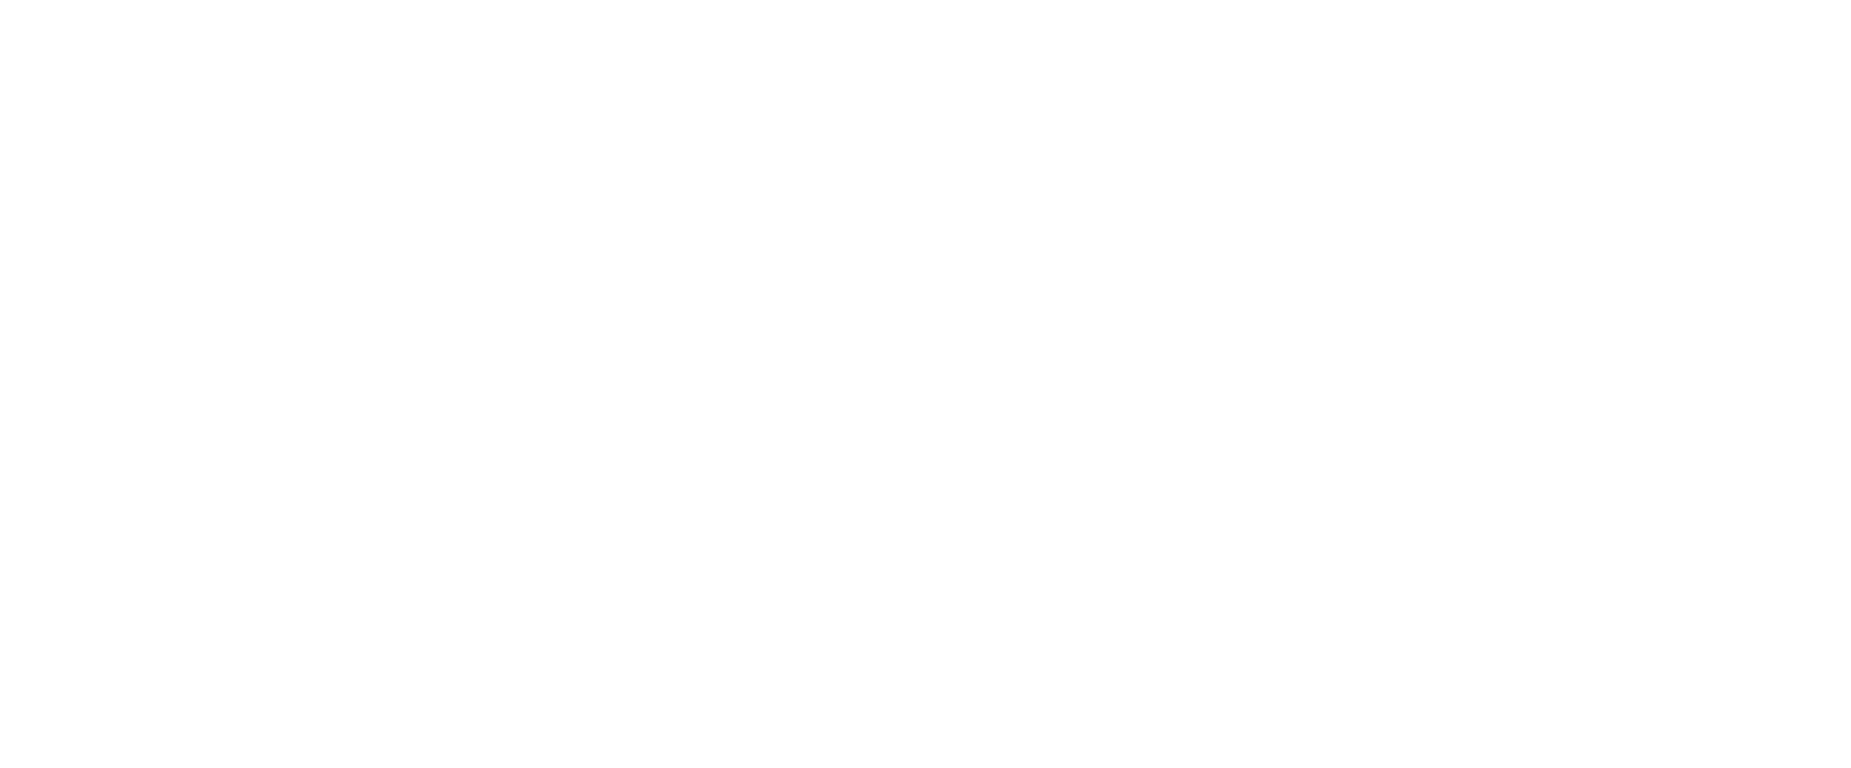 CS2 Logo